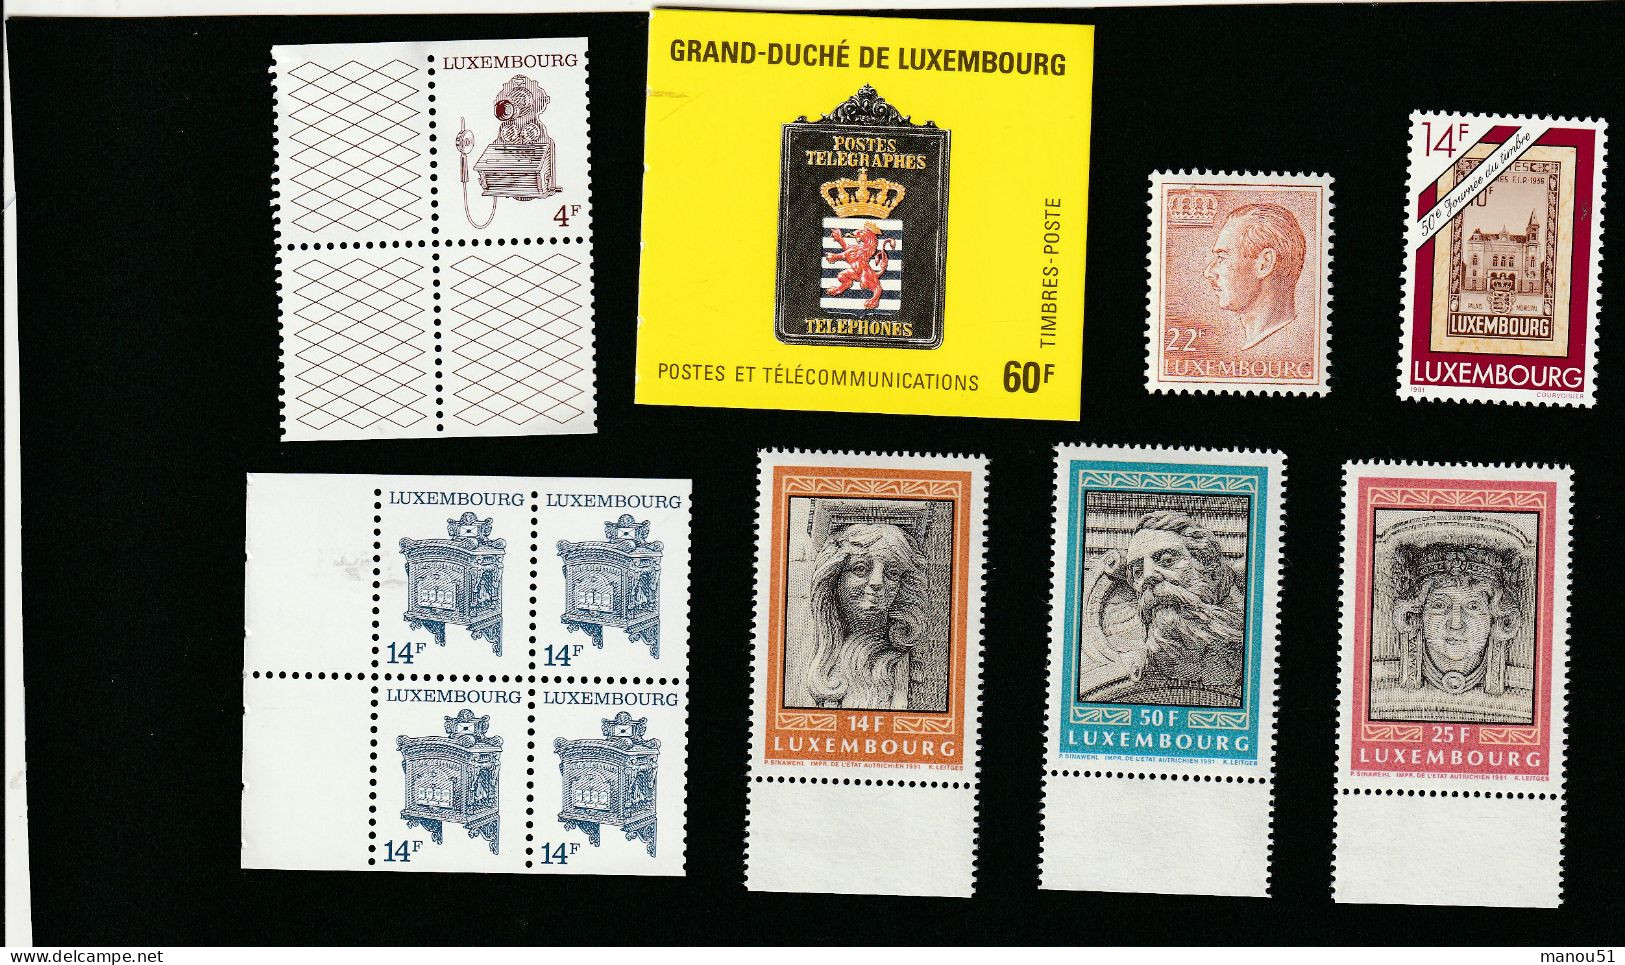 LUXEMBOURG - Emission Du 23.09.1991 - Lot 7 Timbres + 4 Enveloppes 1er Jour - Neufs